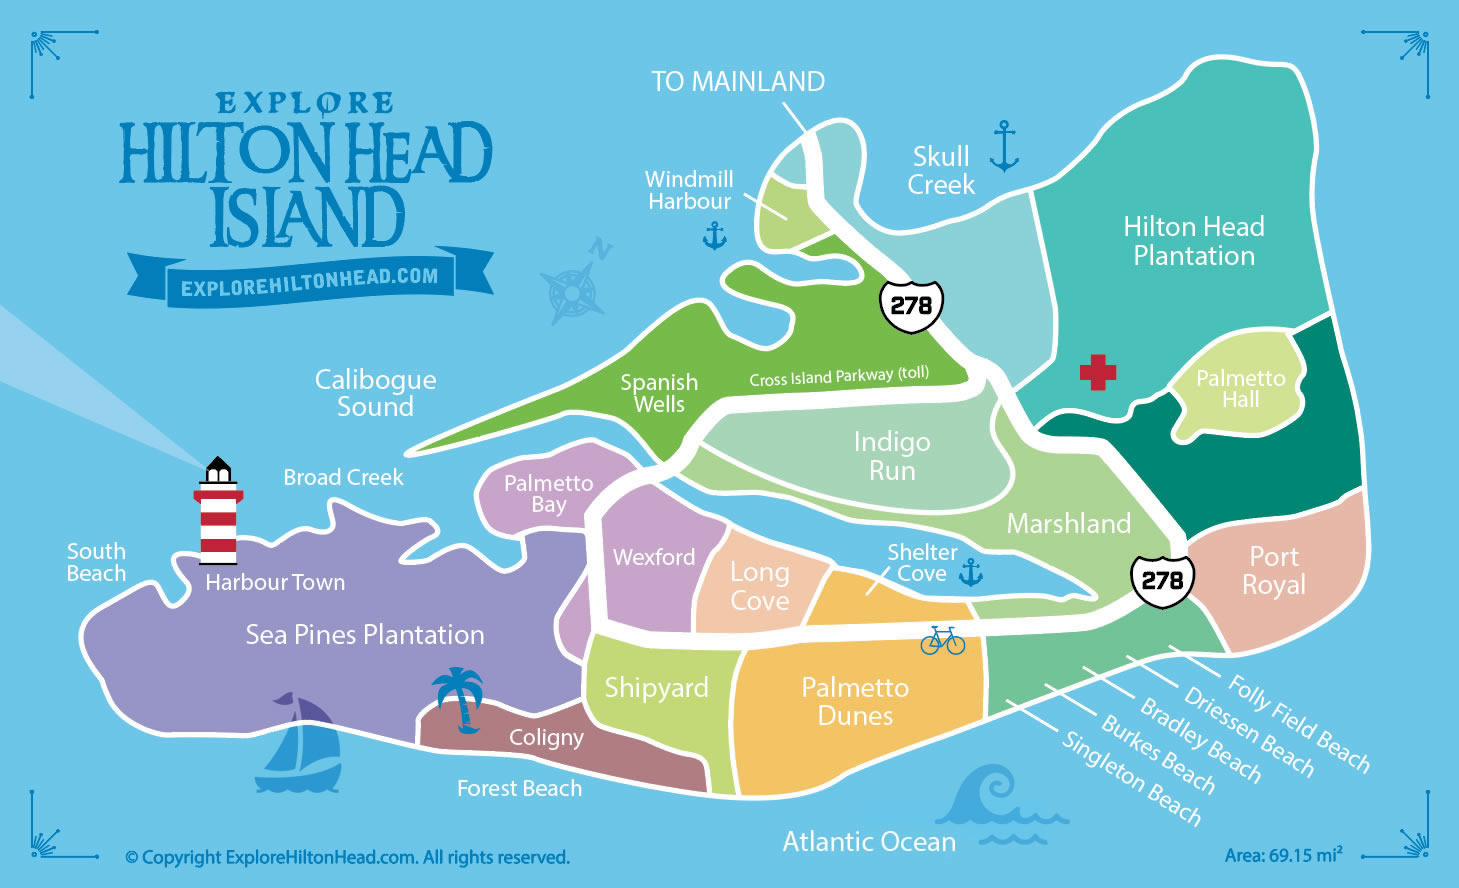 A digital art map of Hilton Head Island featuring popular landmarks